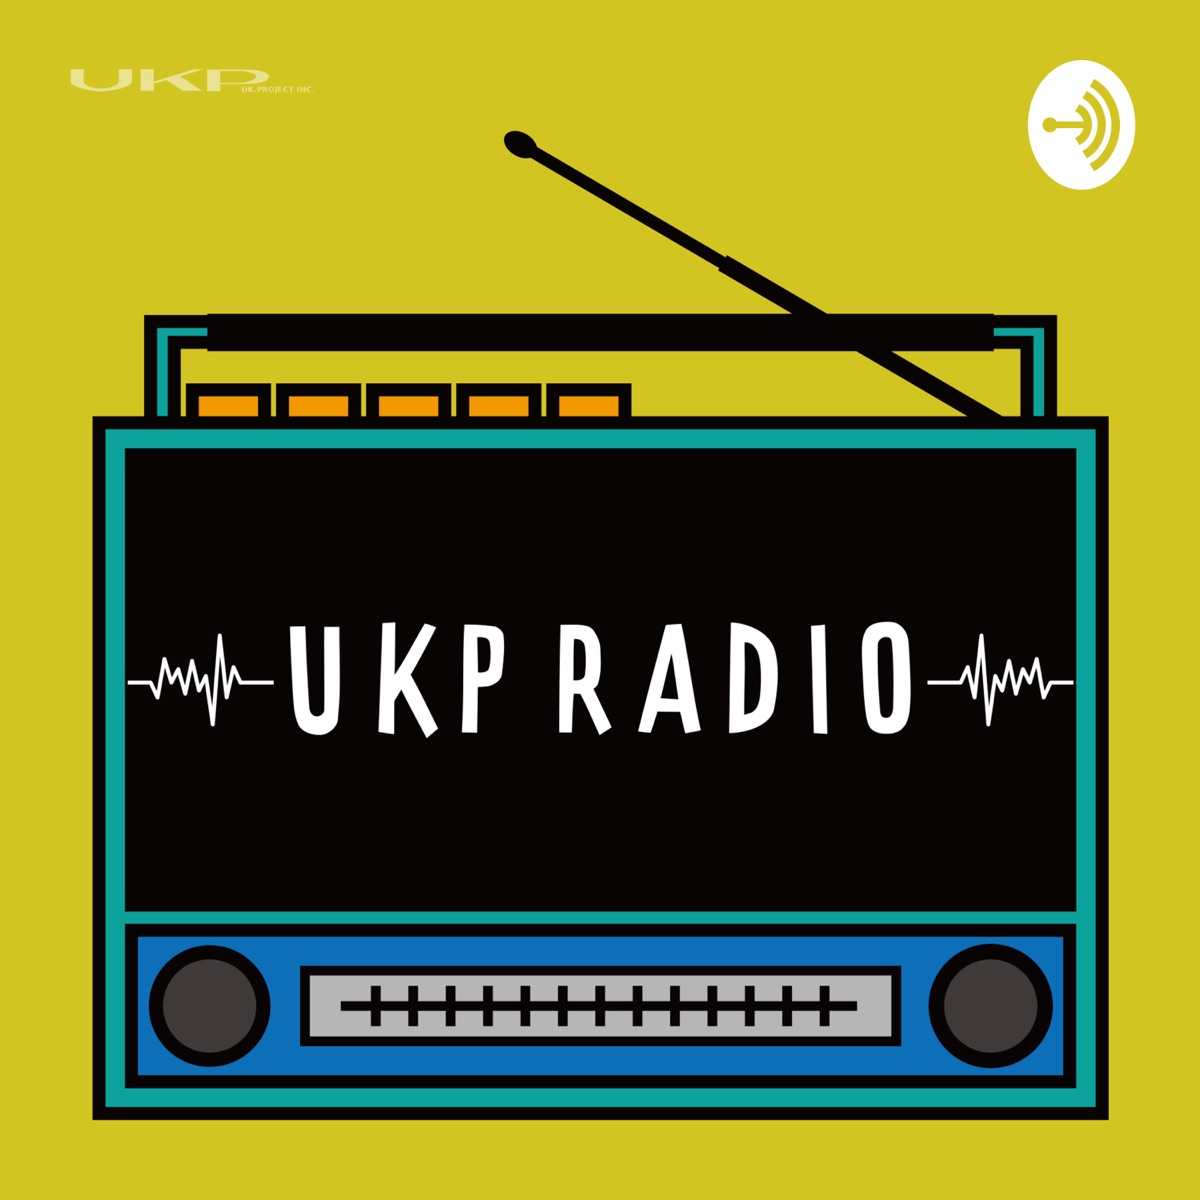 Ukpラジオ Podcast Podtail